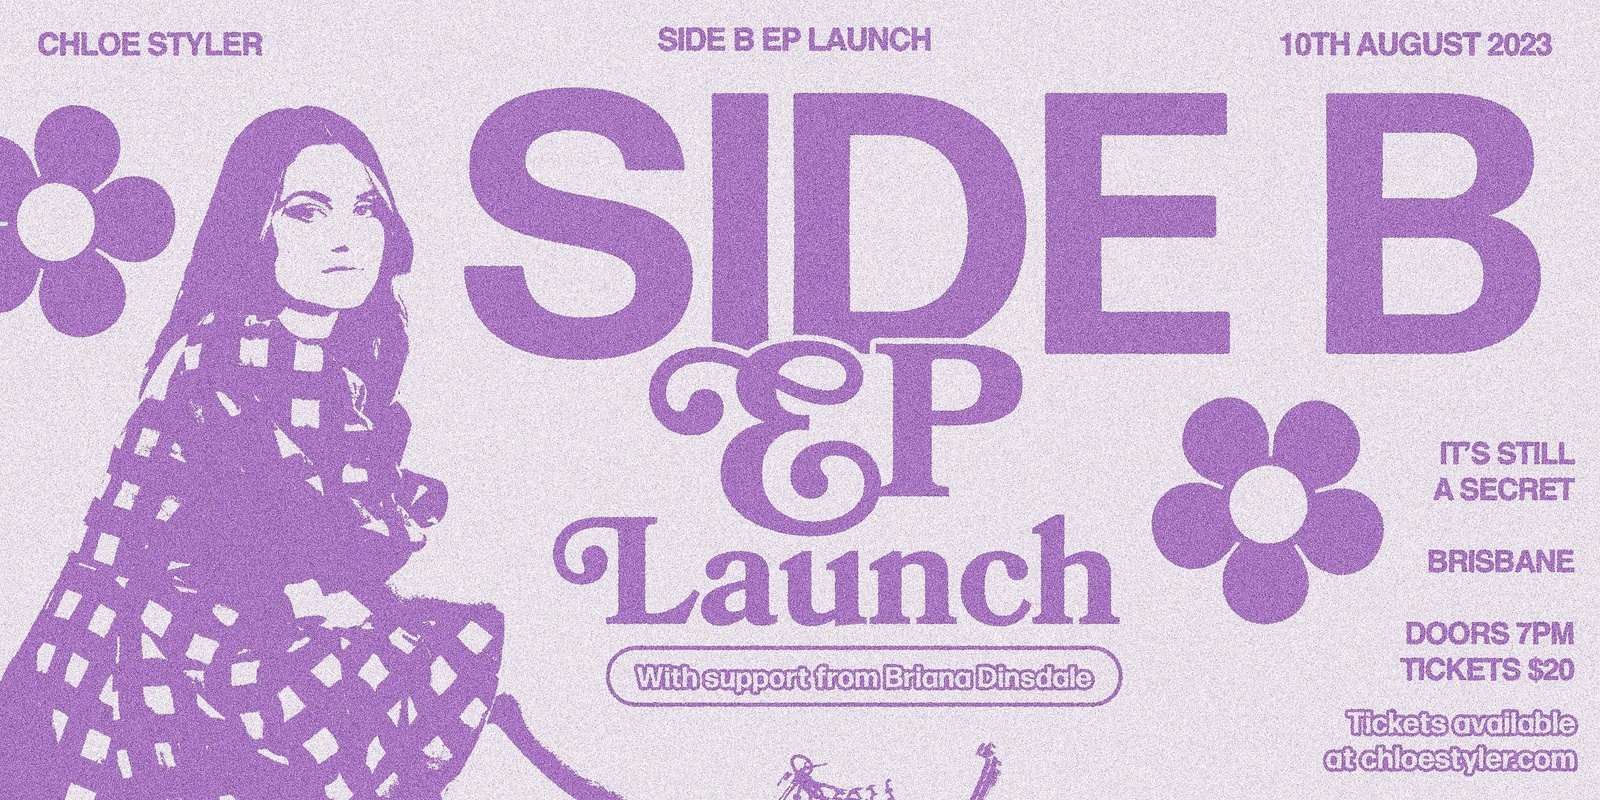 Banner image for Chloe Styler "Side B" EP Launch